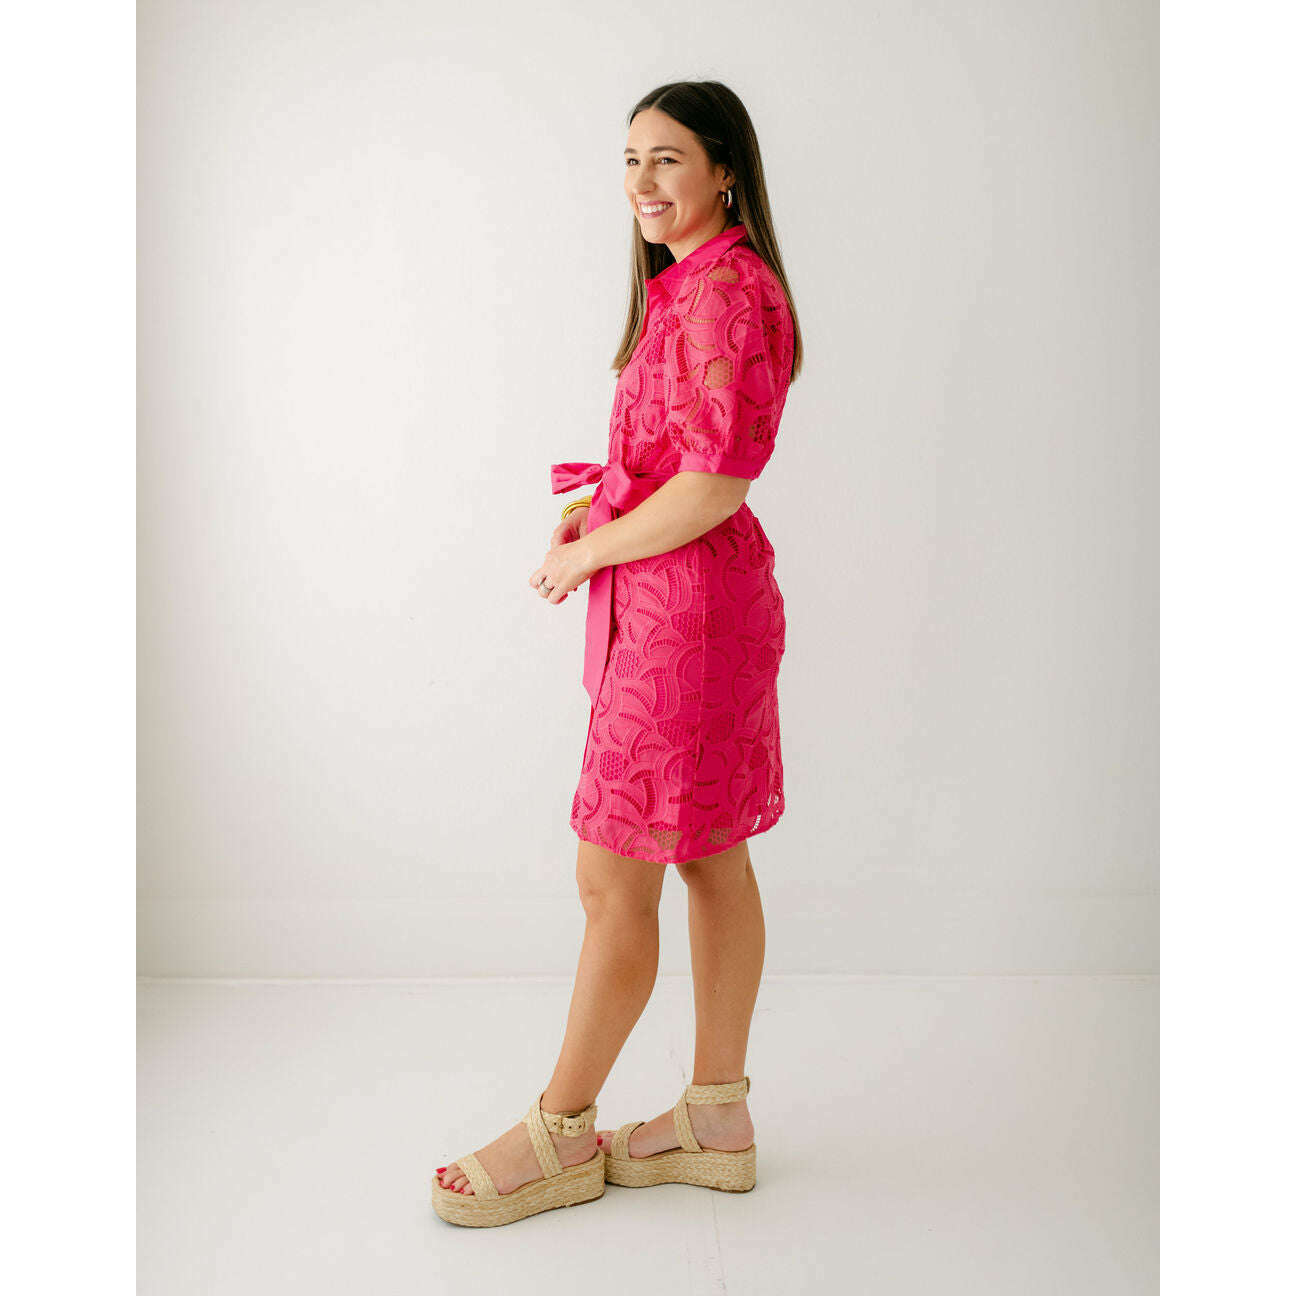 8.28 Boutique:Jade Melody Tam,Jade Melody Tam Pink Placket Lace Shift Dress,